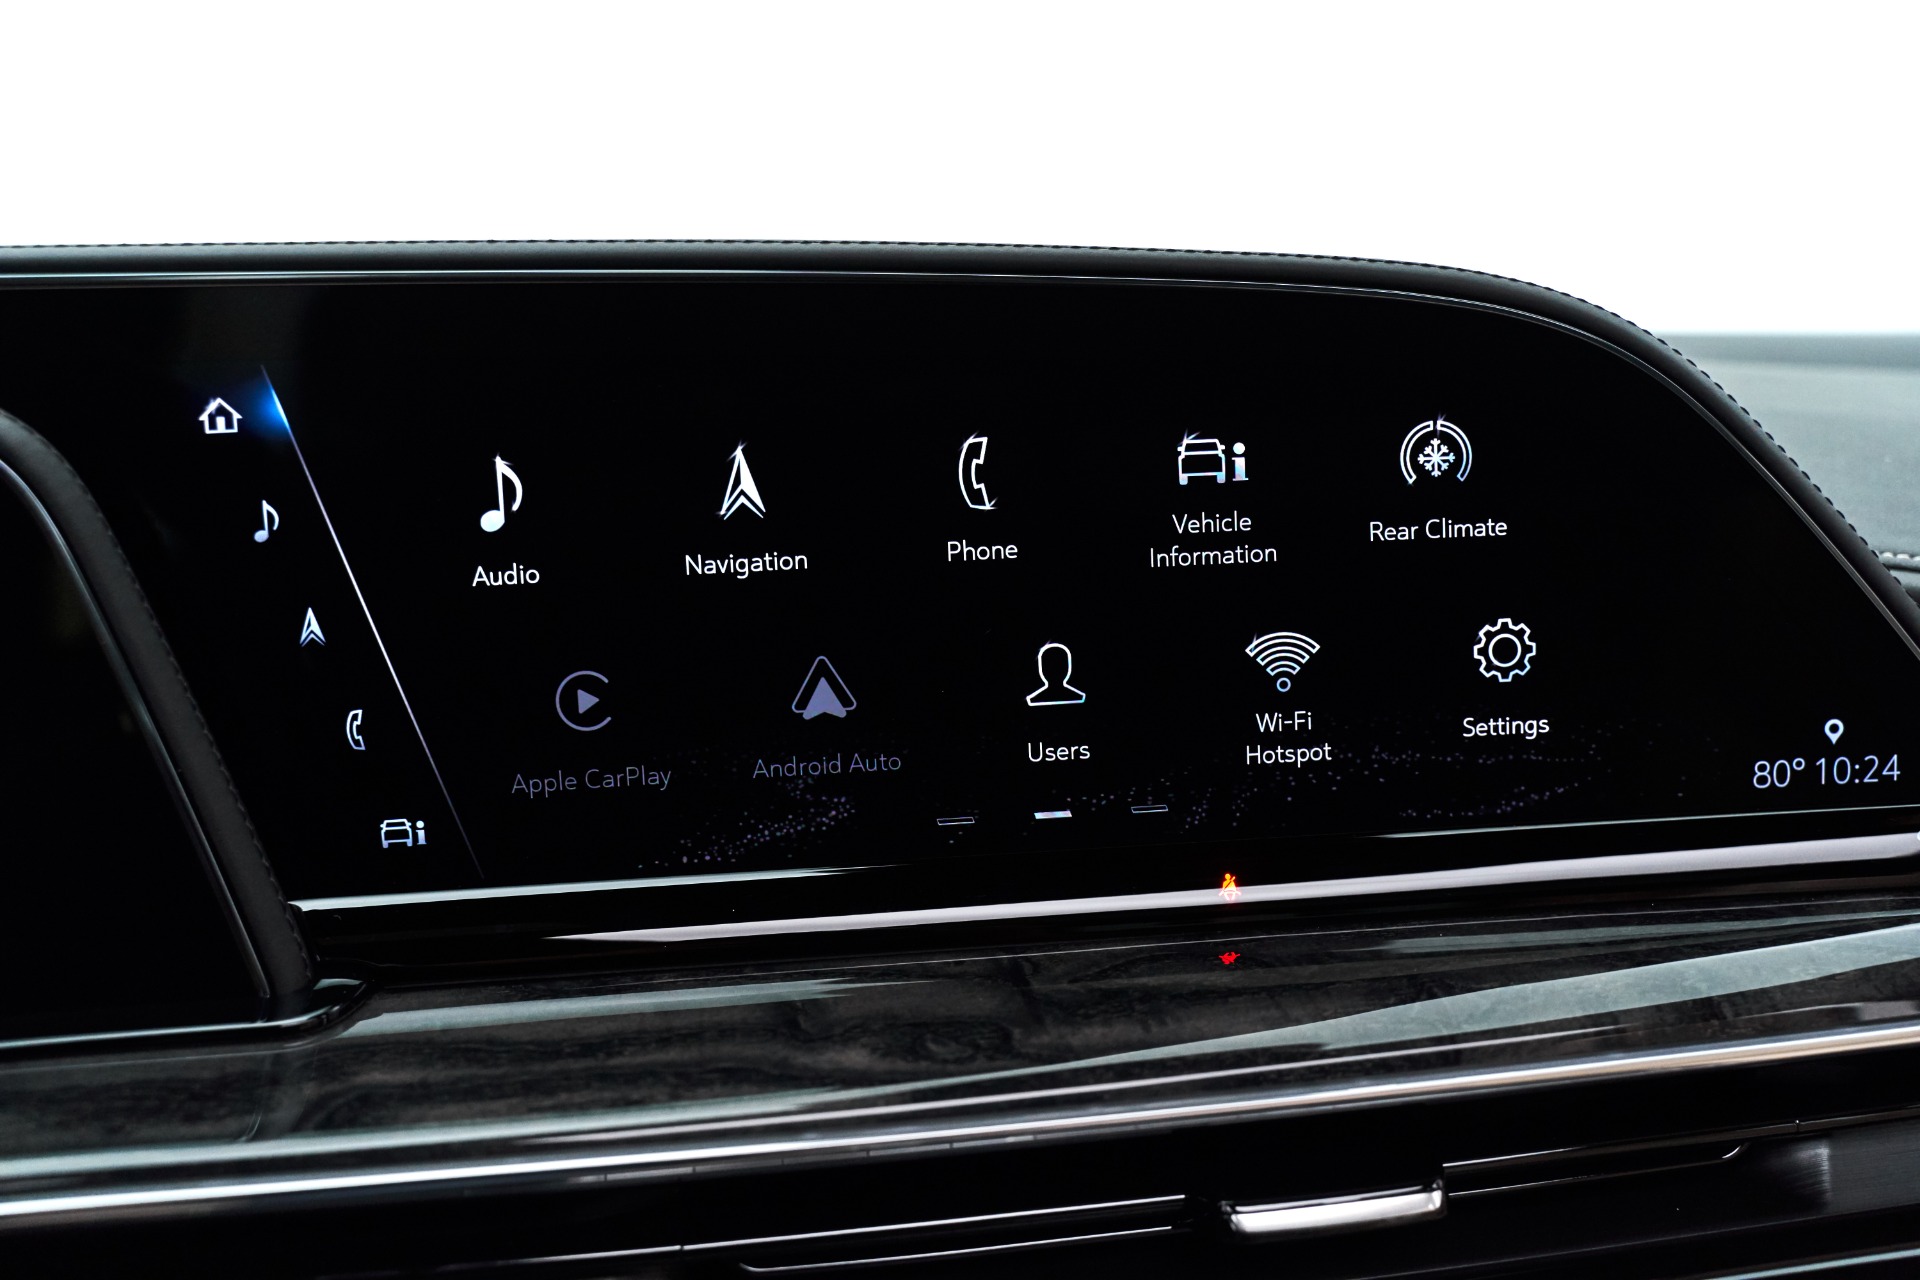 2021 Cadillac Escalade Vehicle Settings Heads-up Display Settings